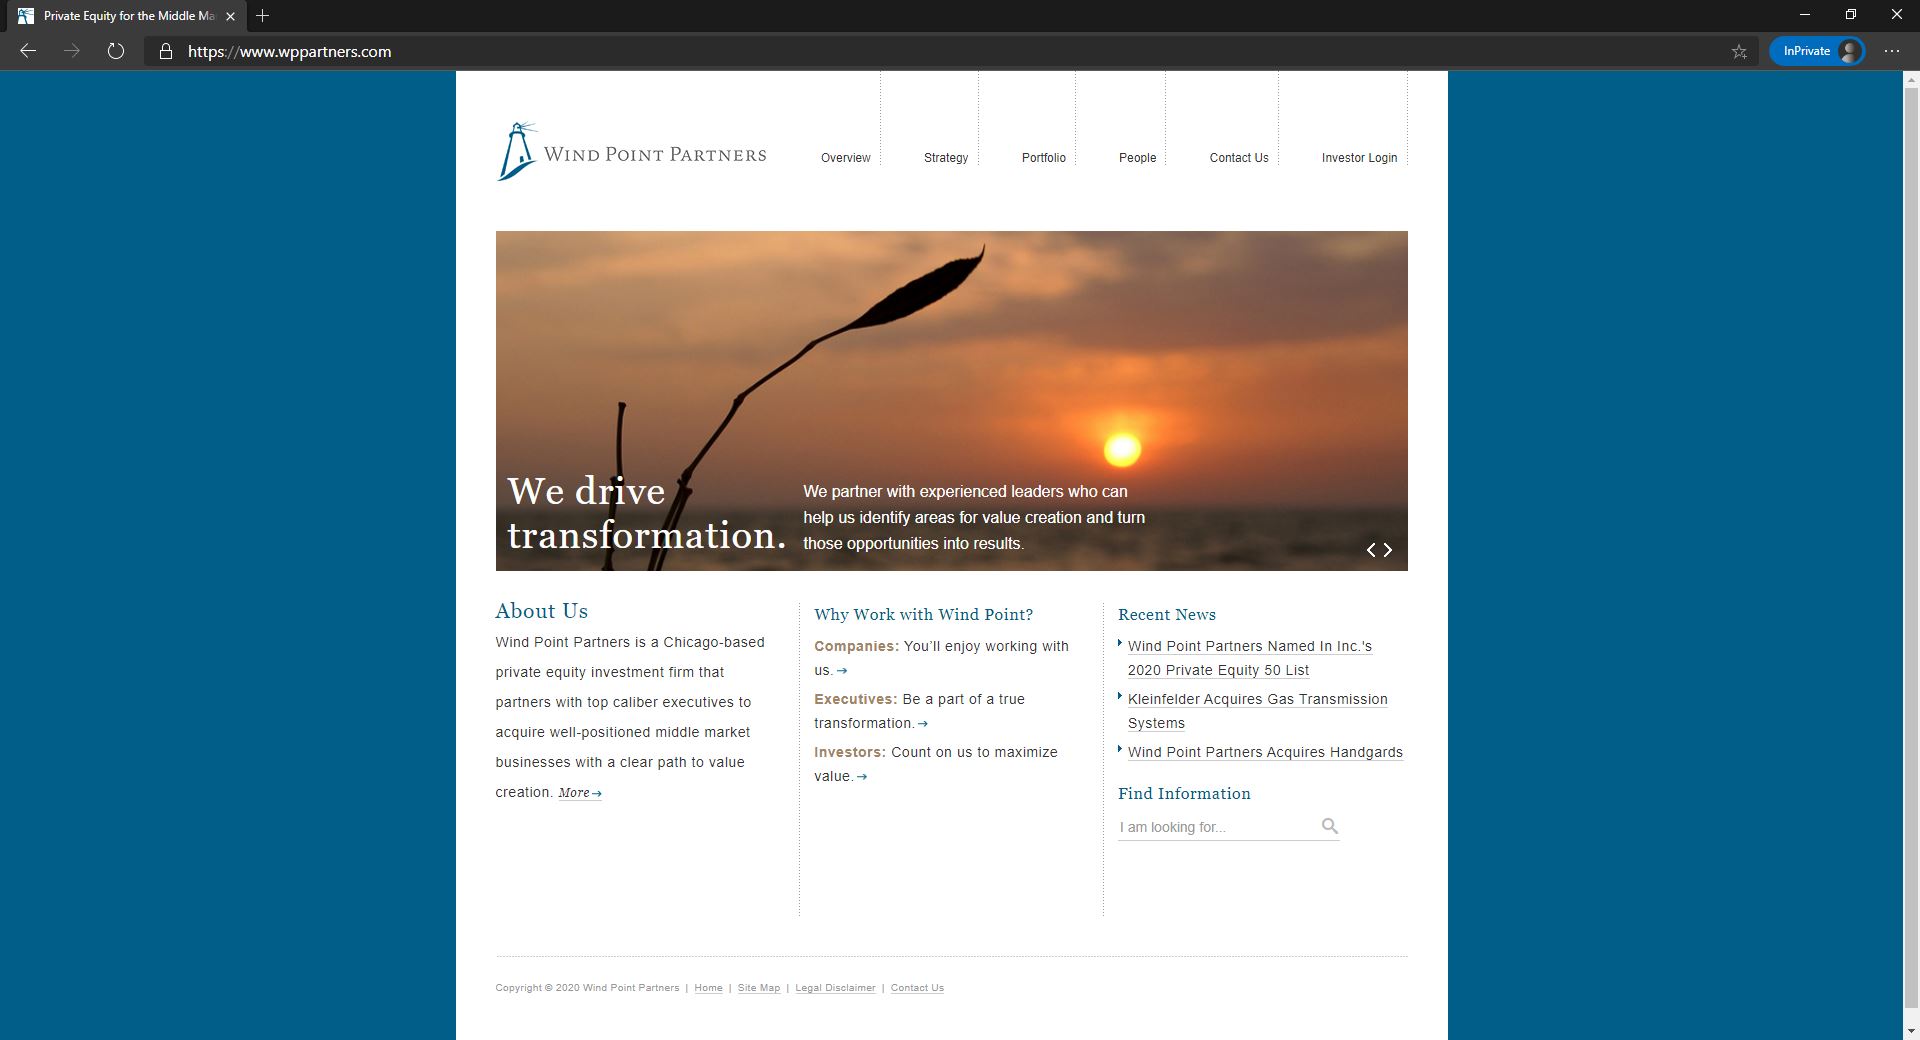 Wind Point Partners website